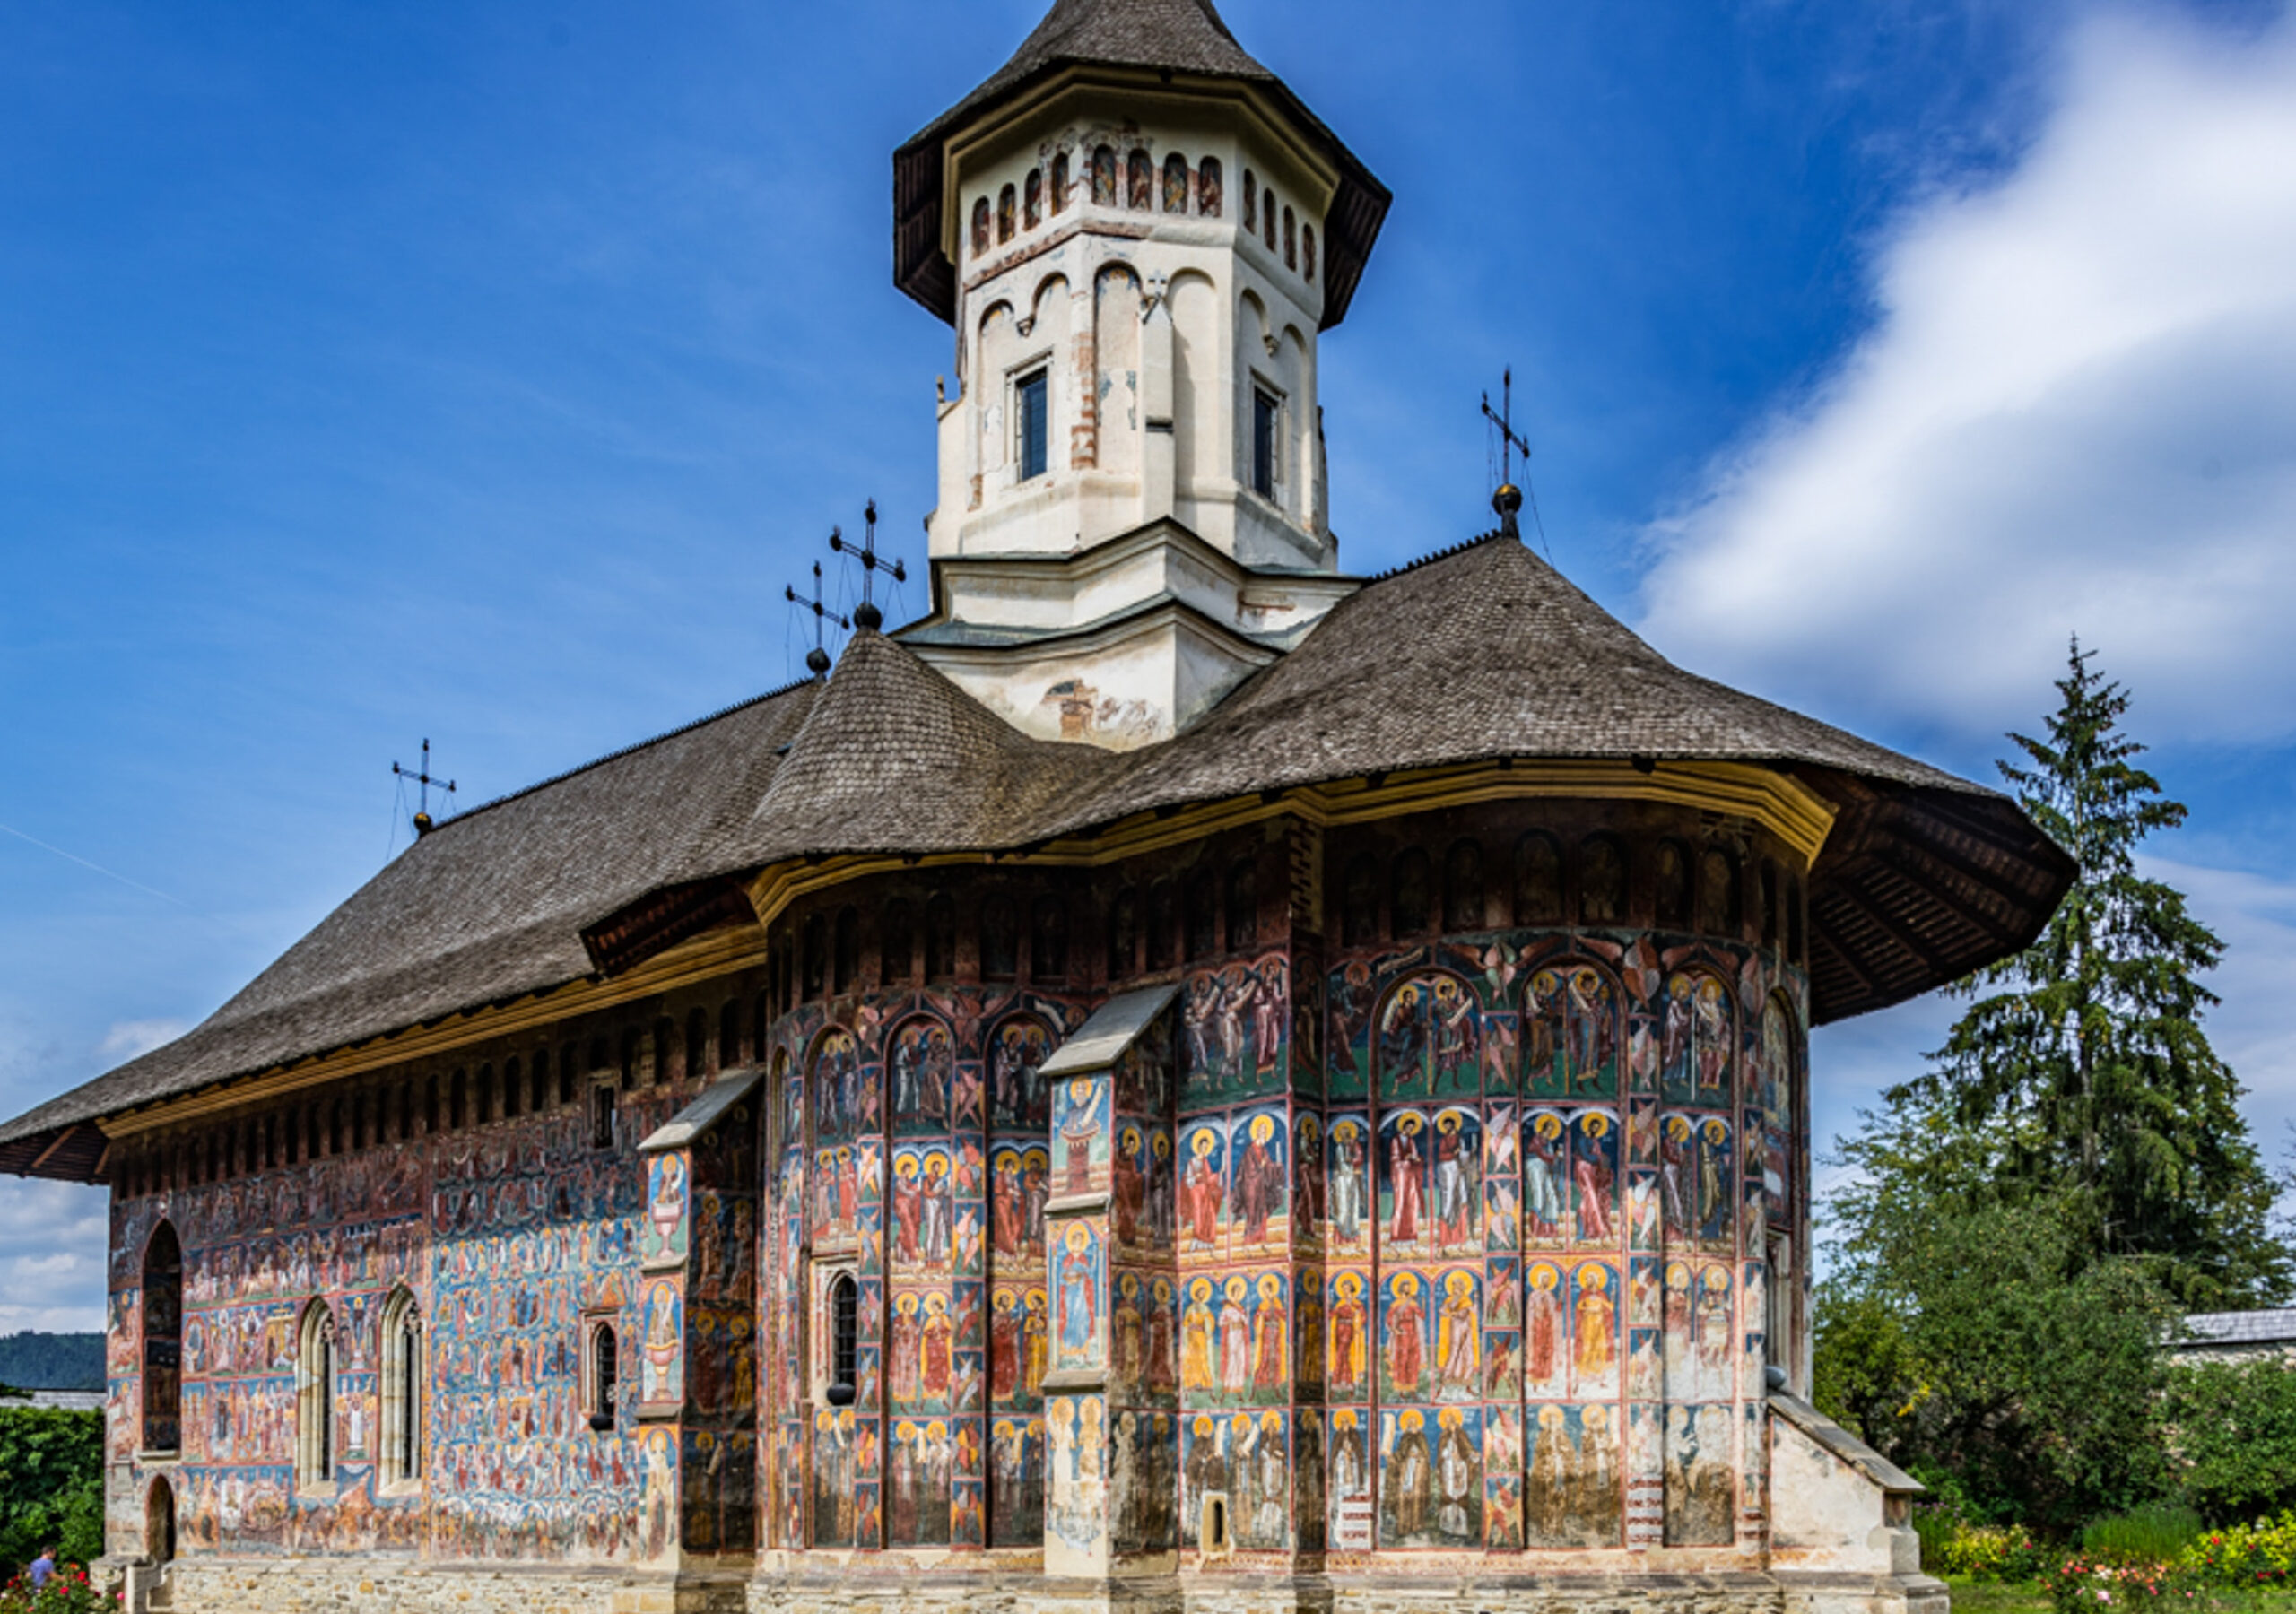 Moldovita Church shows off its exterior Biblical murals